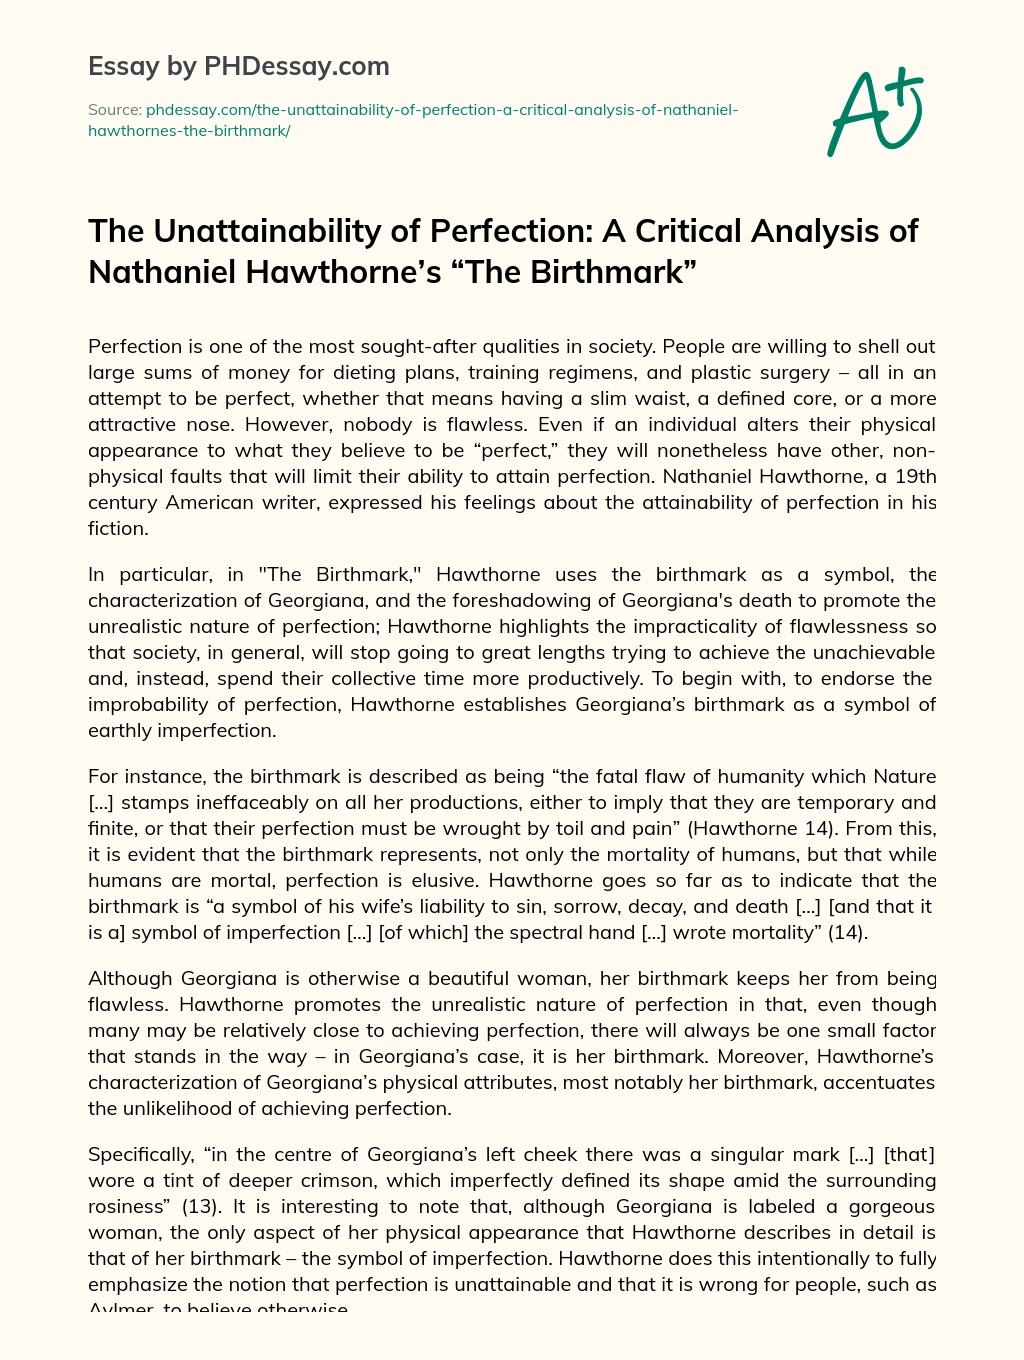 The Unattainability of Perfection: A Critical Analysis of Nathaniel Hawthorne’s “The Birthmark” essay